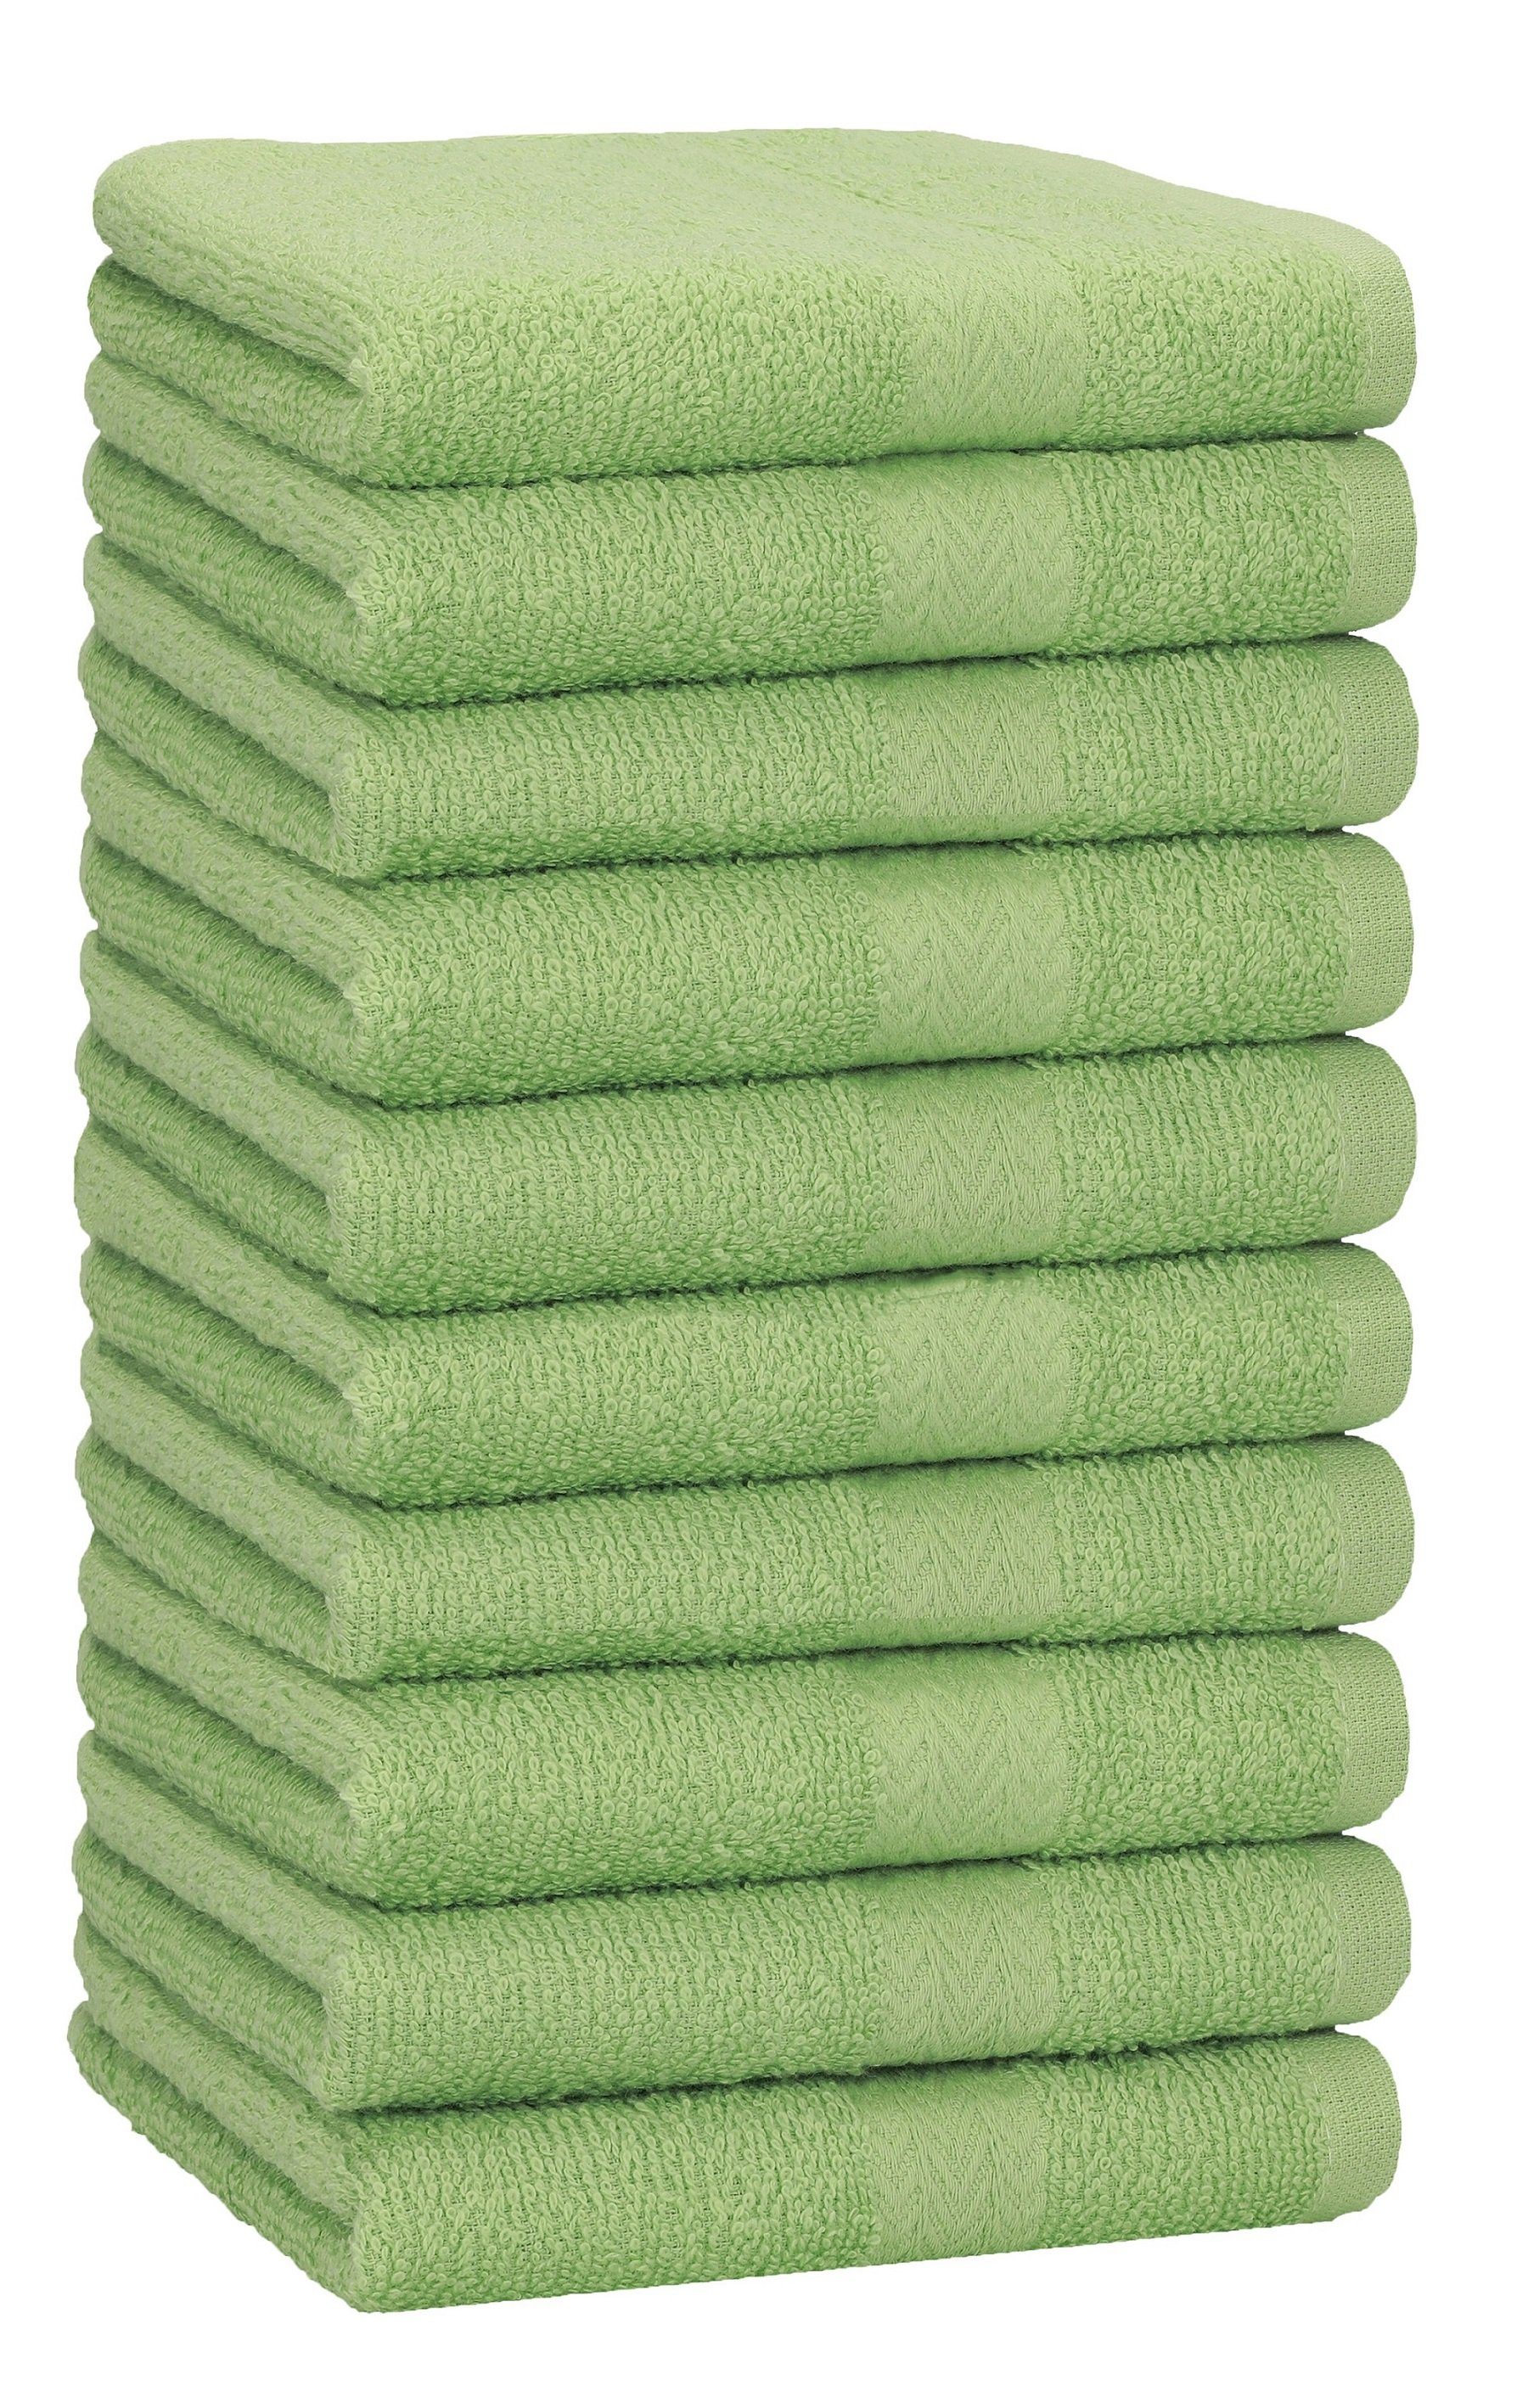 Betz Handtücher 10 Stück Handtücher apfelgrün, 50x100 Baumwolle 100% Premium cm Farbe